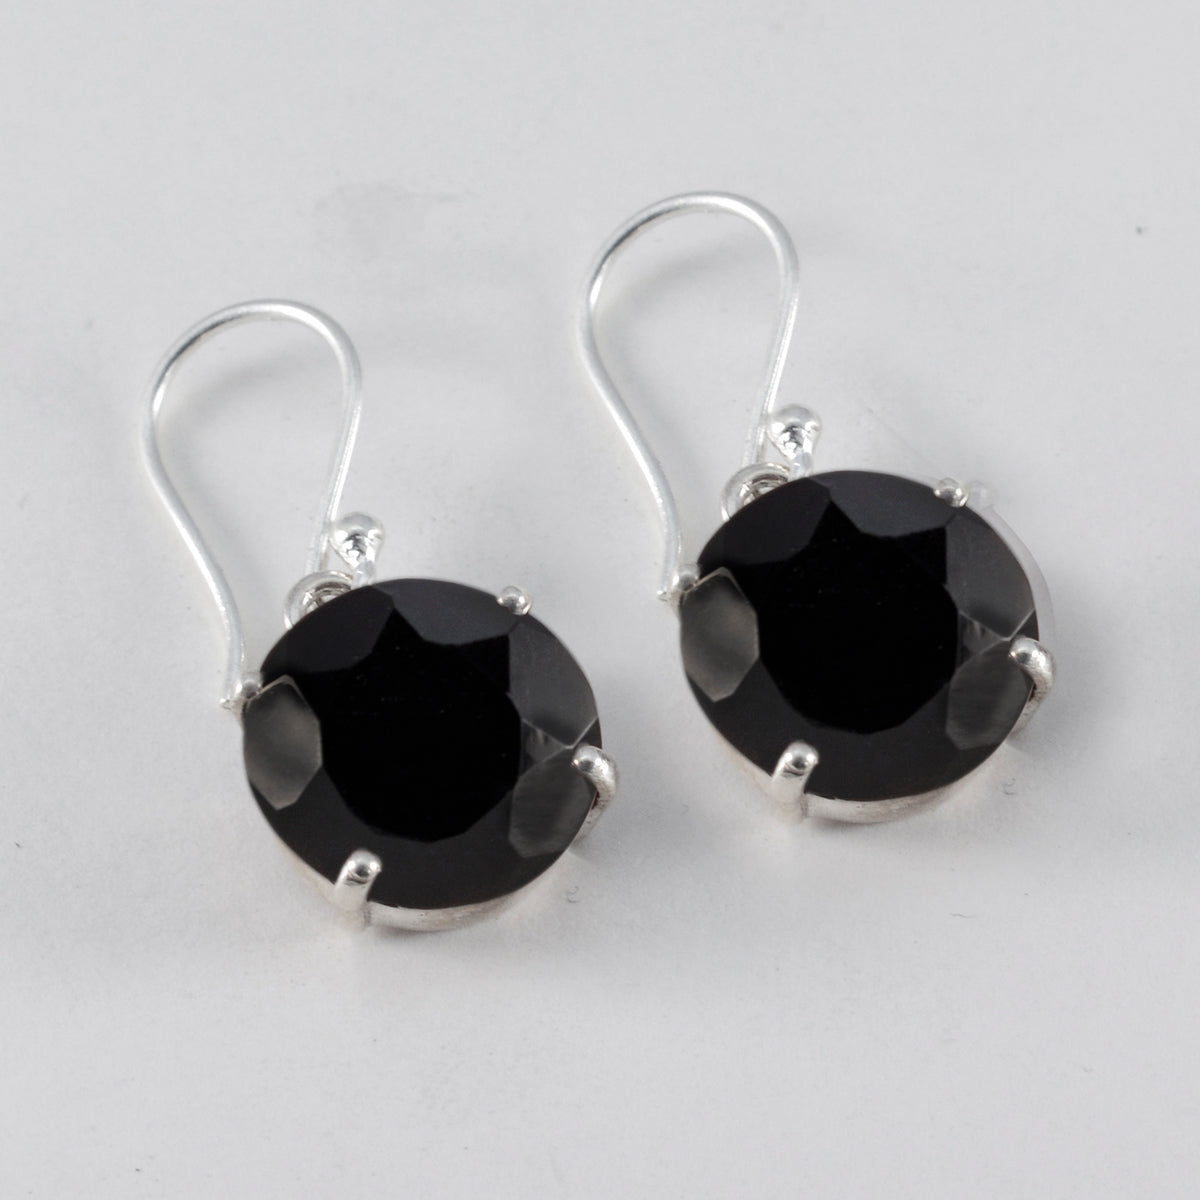 Riyo Divine 925 Sterling Silver Earring For Damsel Black Onyx Earring Bezel Setting Black Earring Dangle Earring